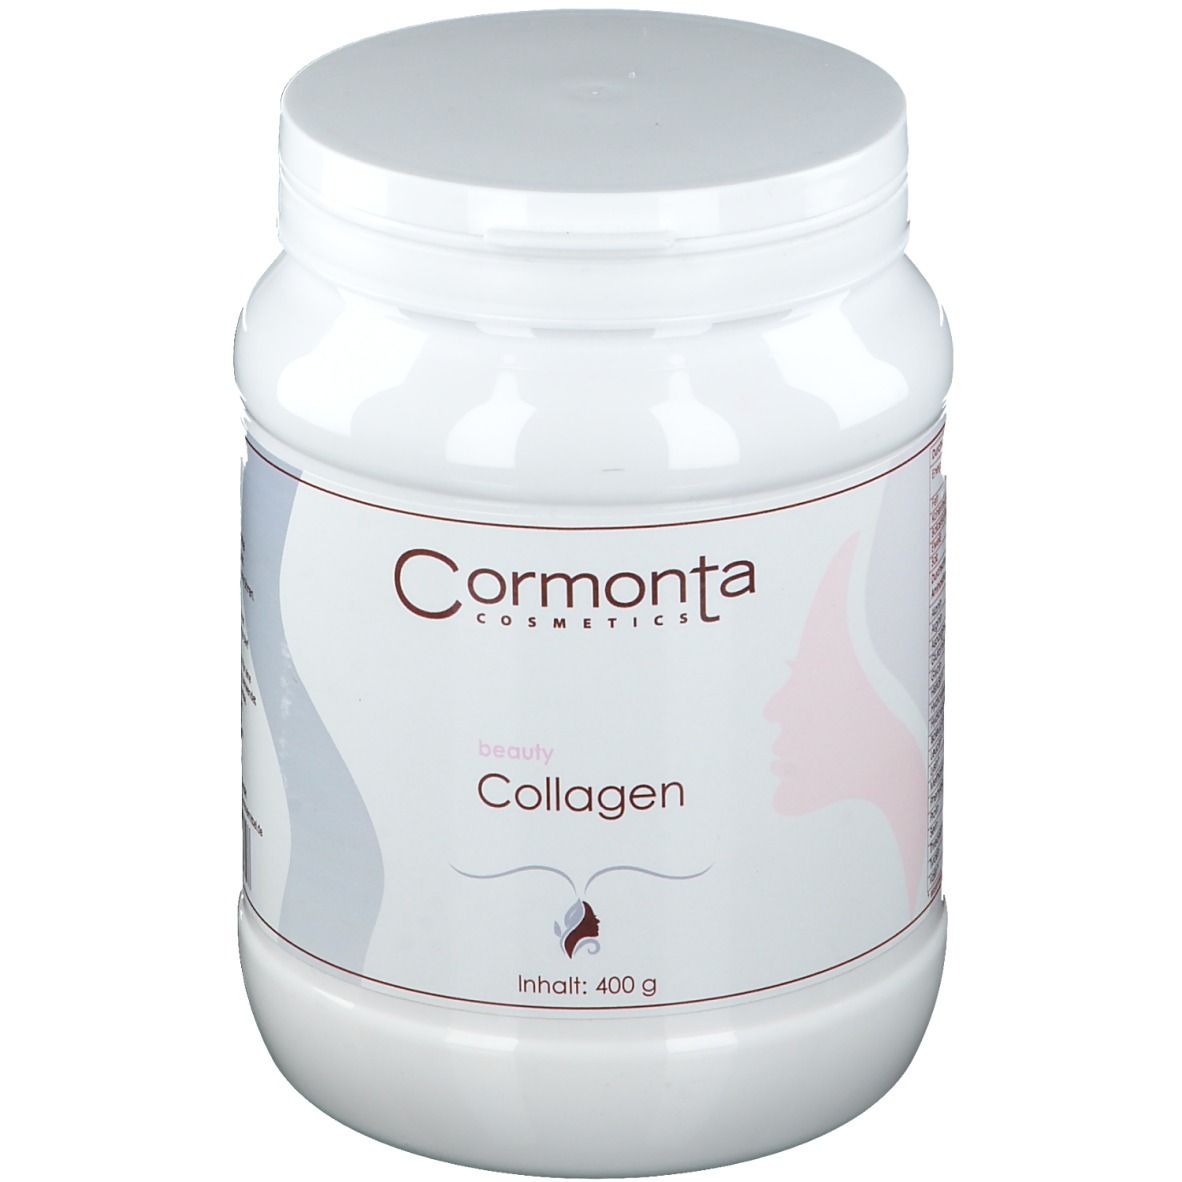 Comonta Cosmetics Collagen Beauty